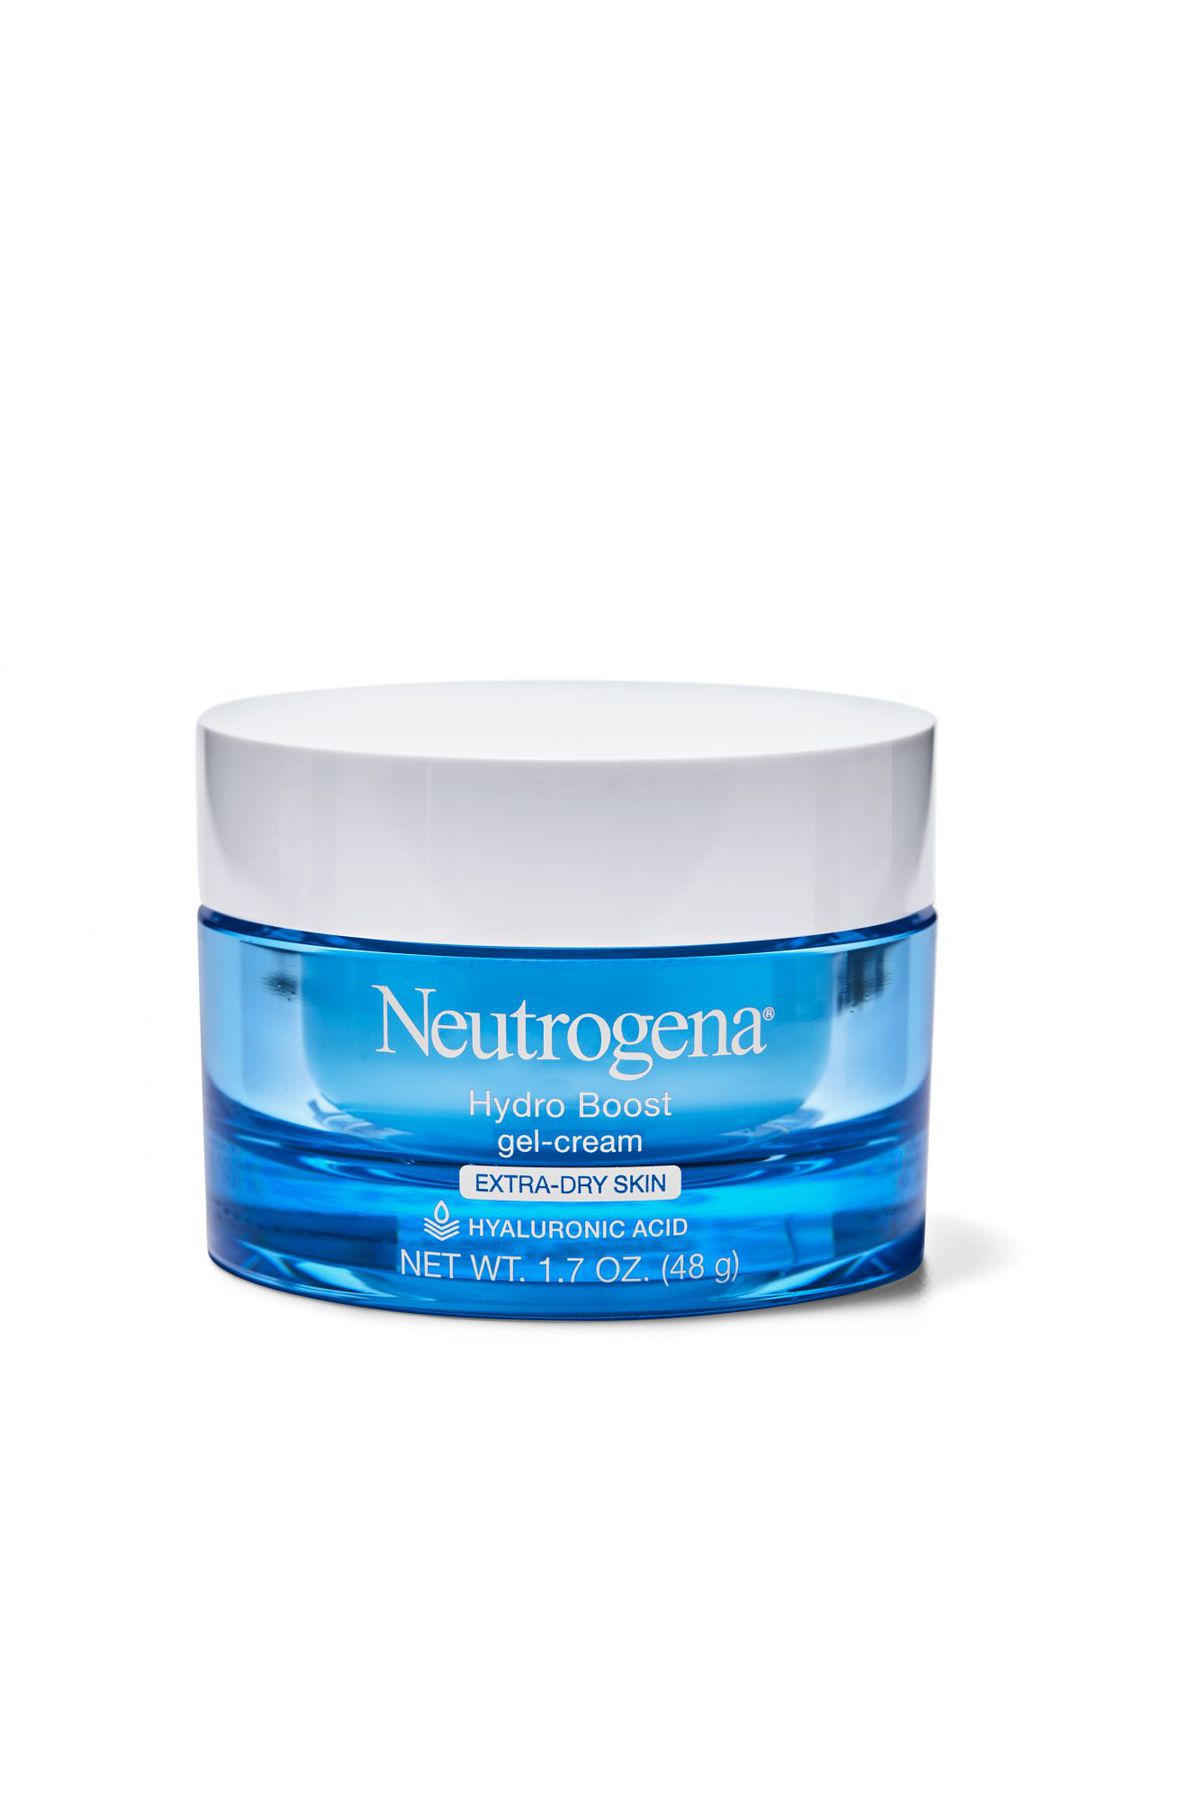 Neutrogena Hydro Boost Gel-Cream for Extra-Dry Skin